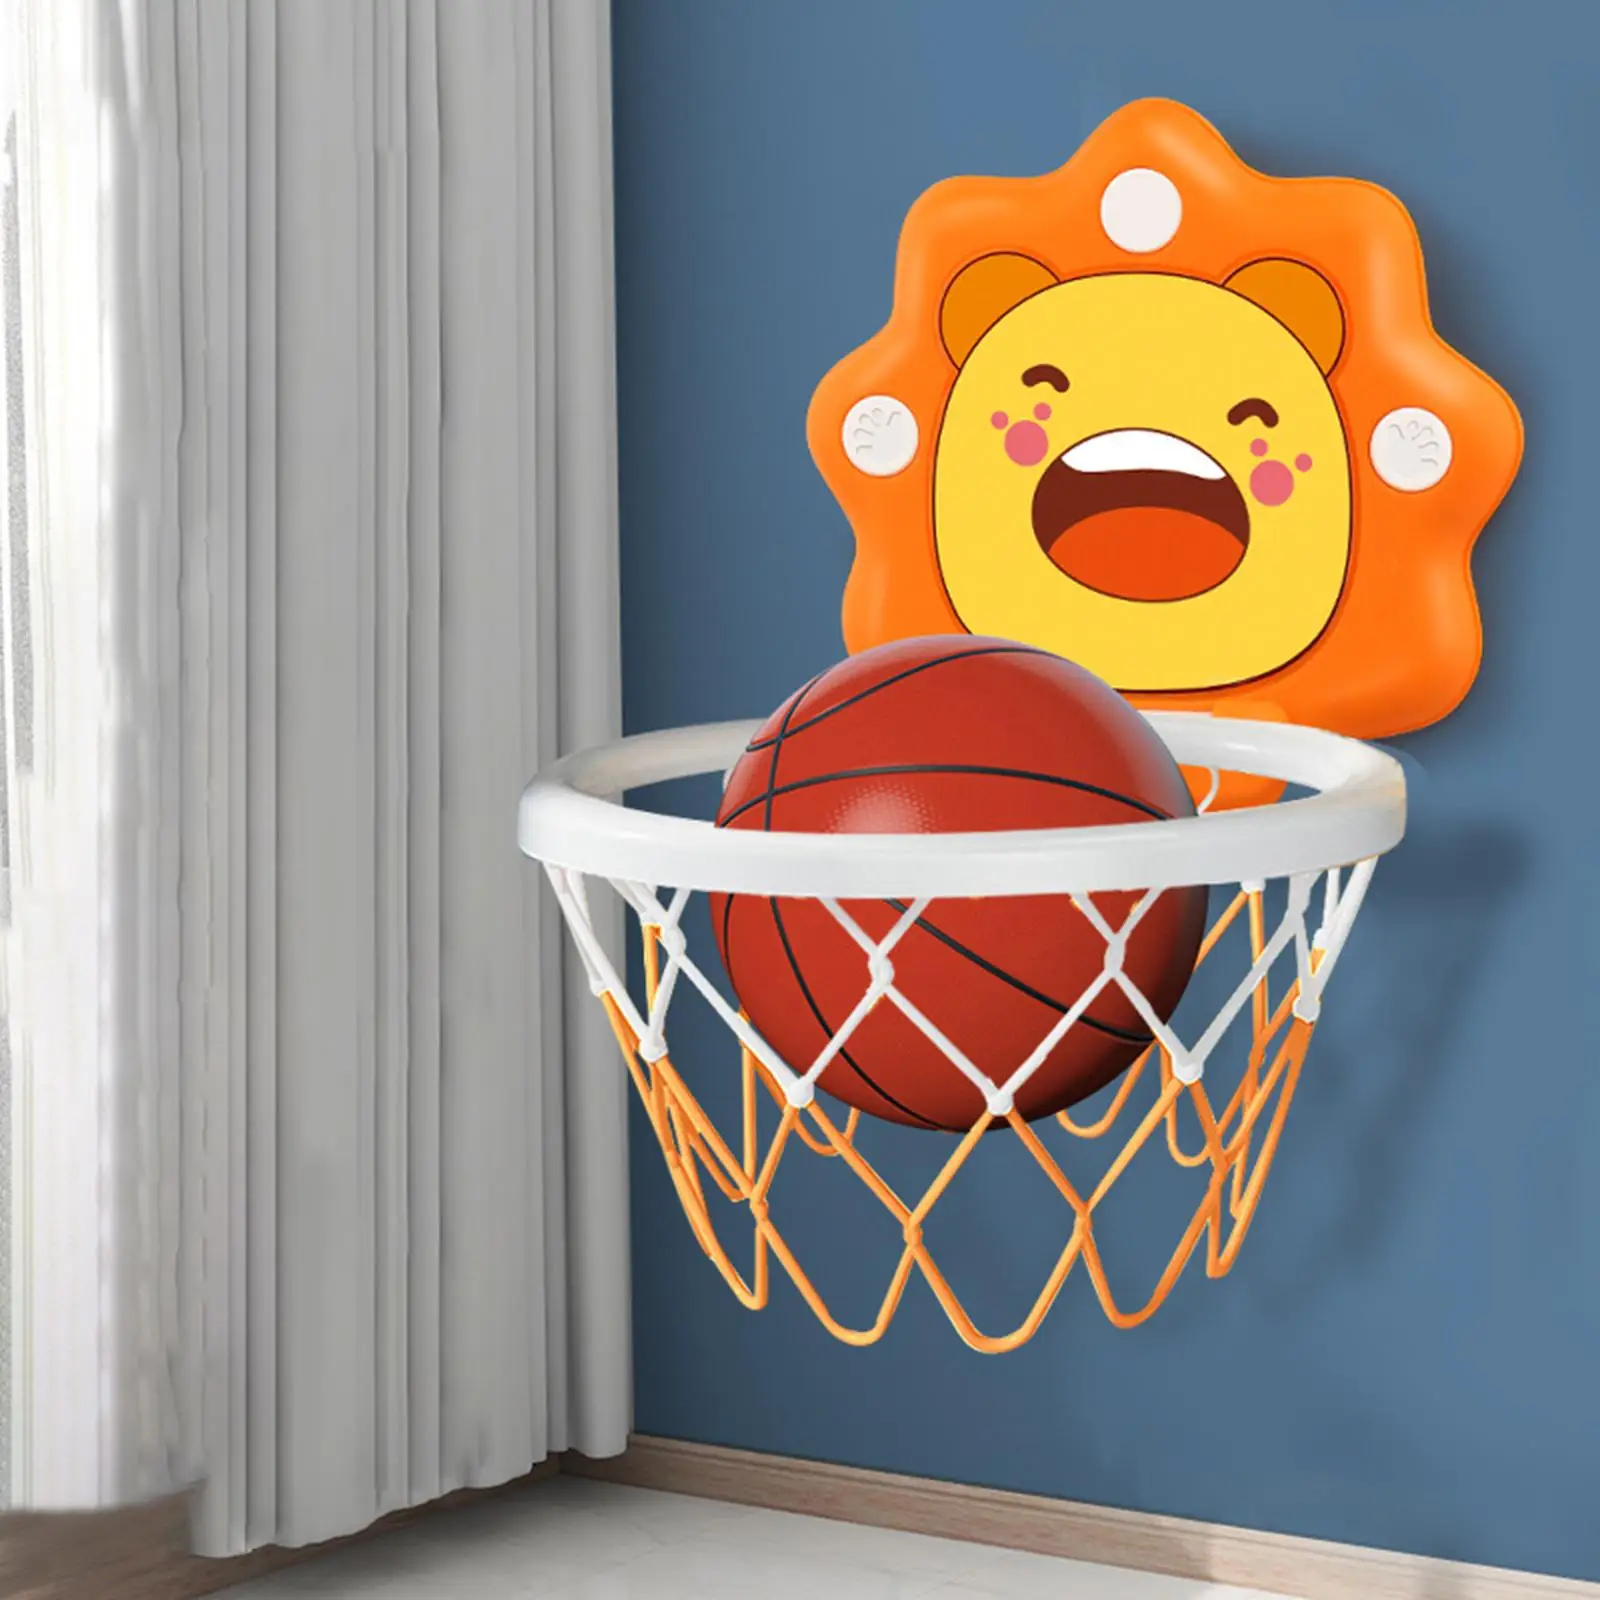 Basketball Playing Set Basketball Hoop Set Net Toys for Indoor Outdoor Boy Children